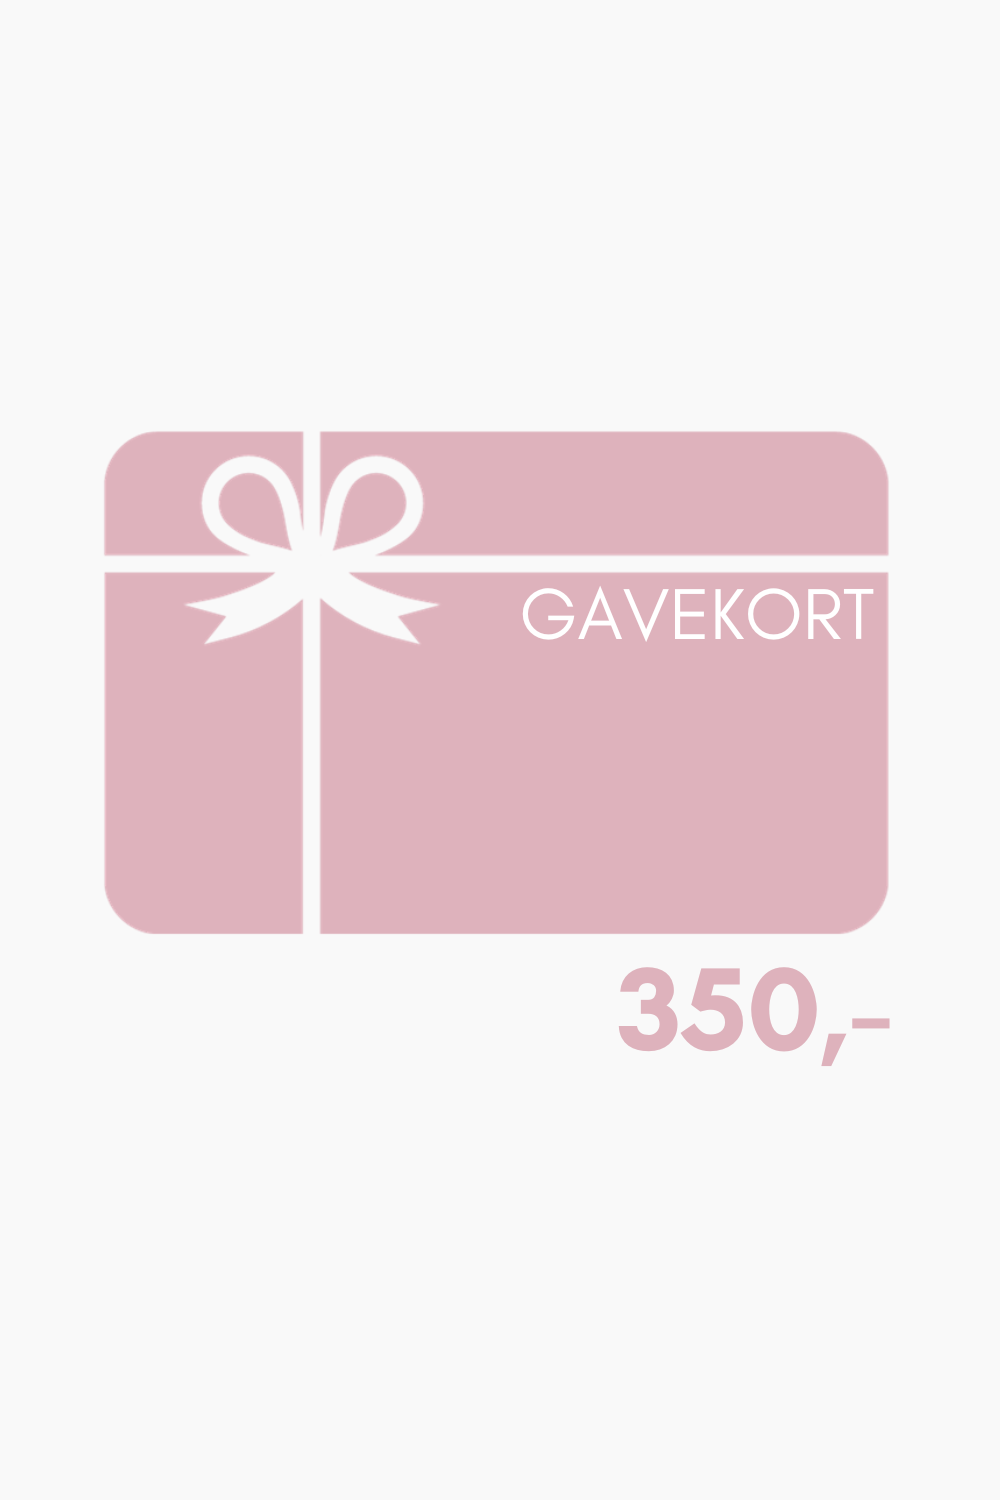 QNTS Gavekort 350 kr - 350